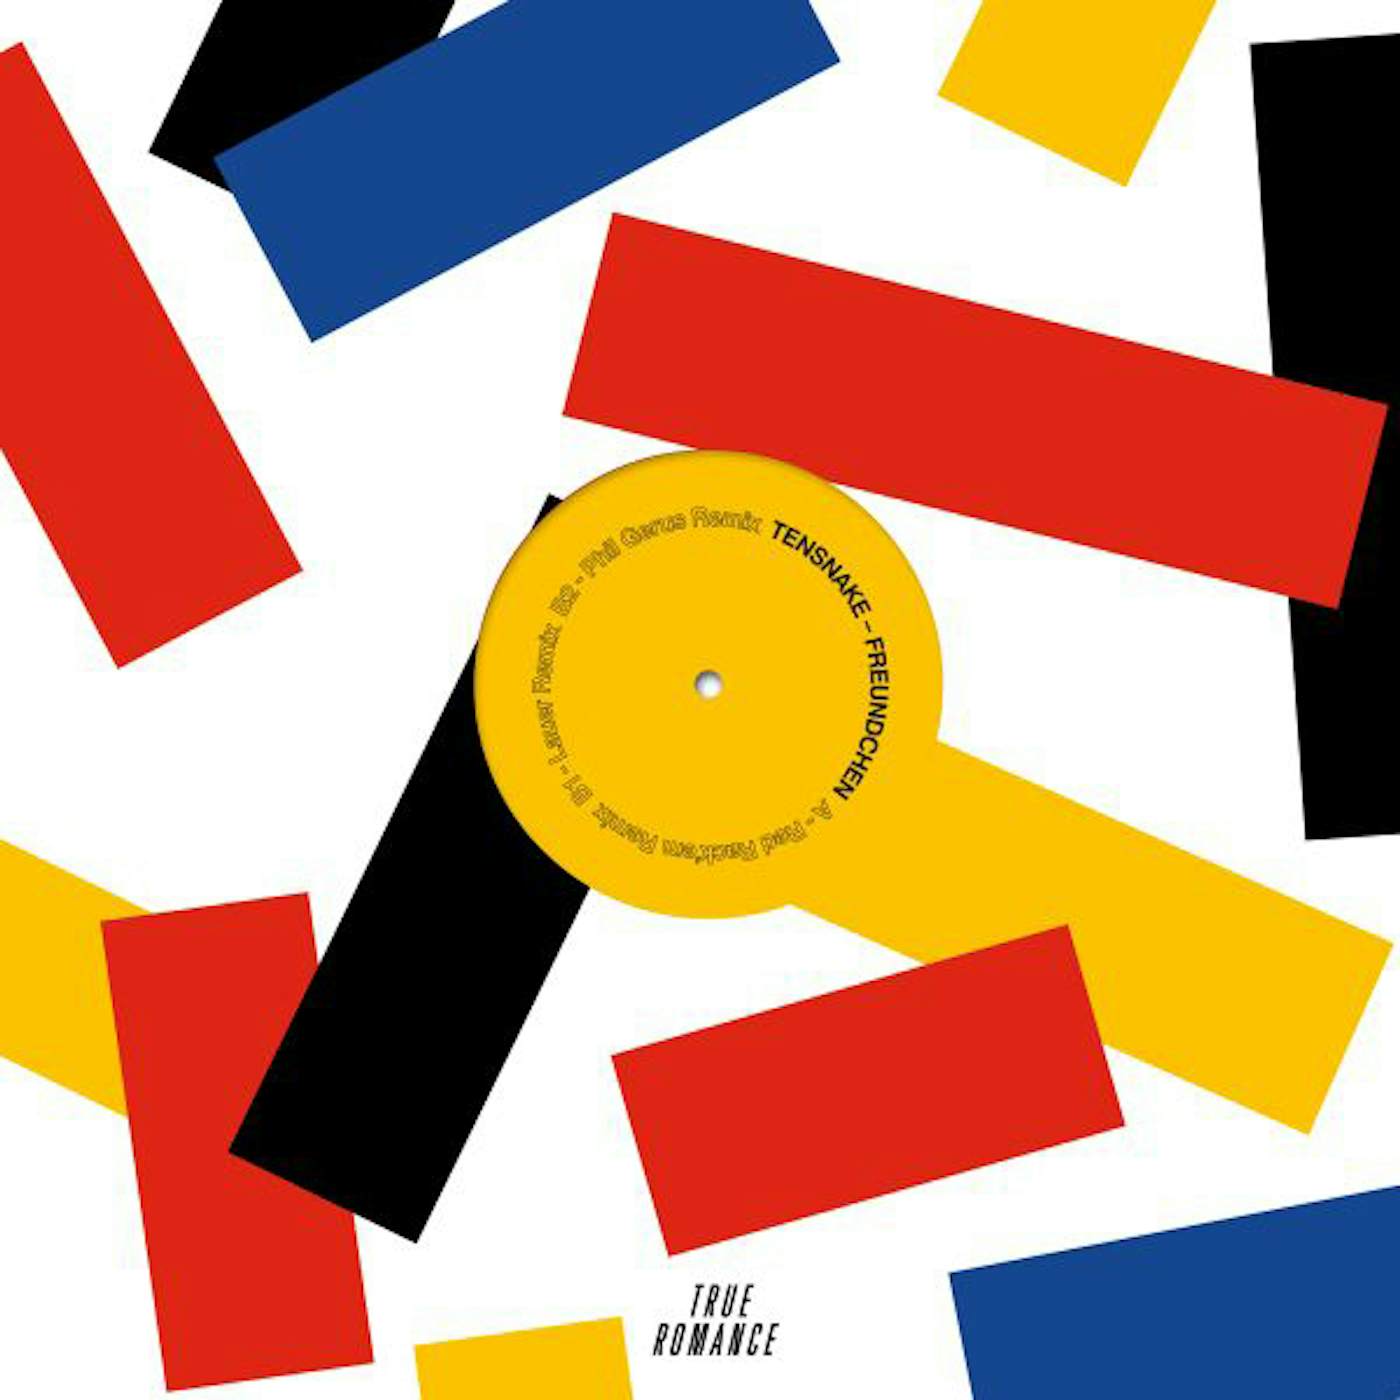 Tensnake Freundchen Remixes Vinyl Record